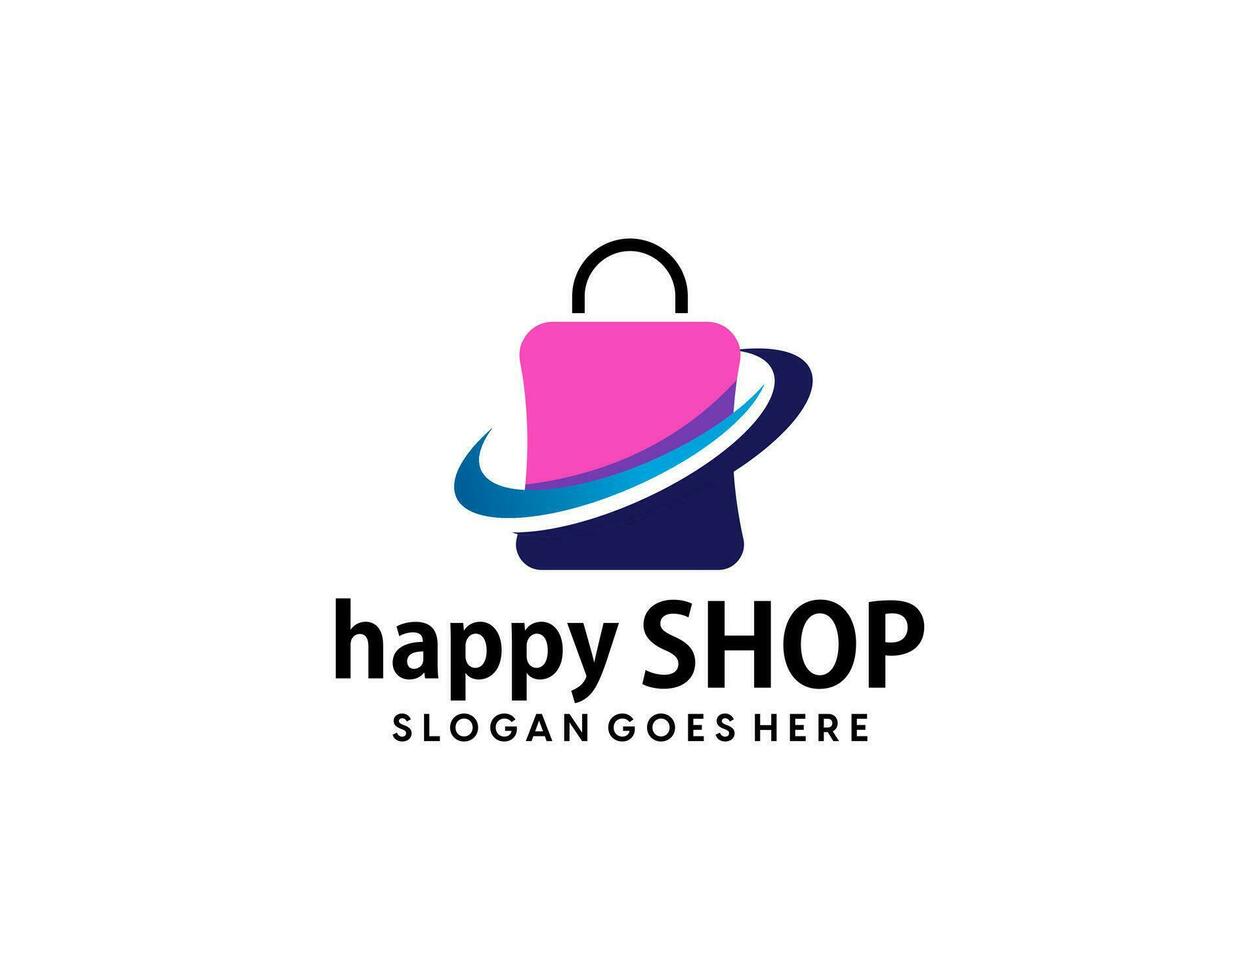 Online Shop Logo Template Design Vector